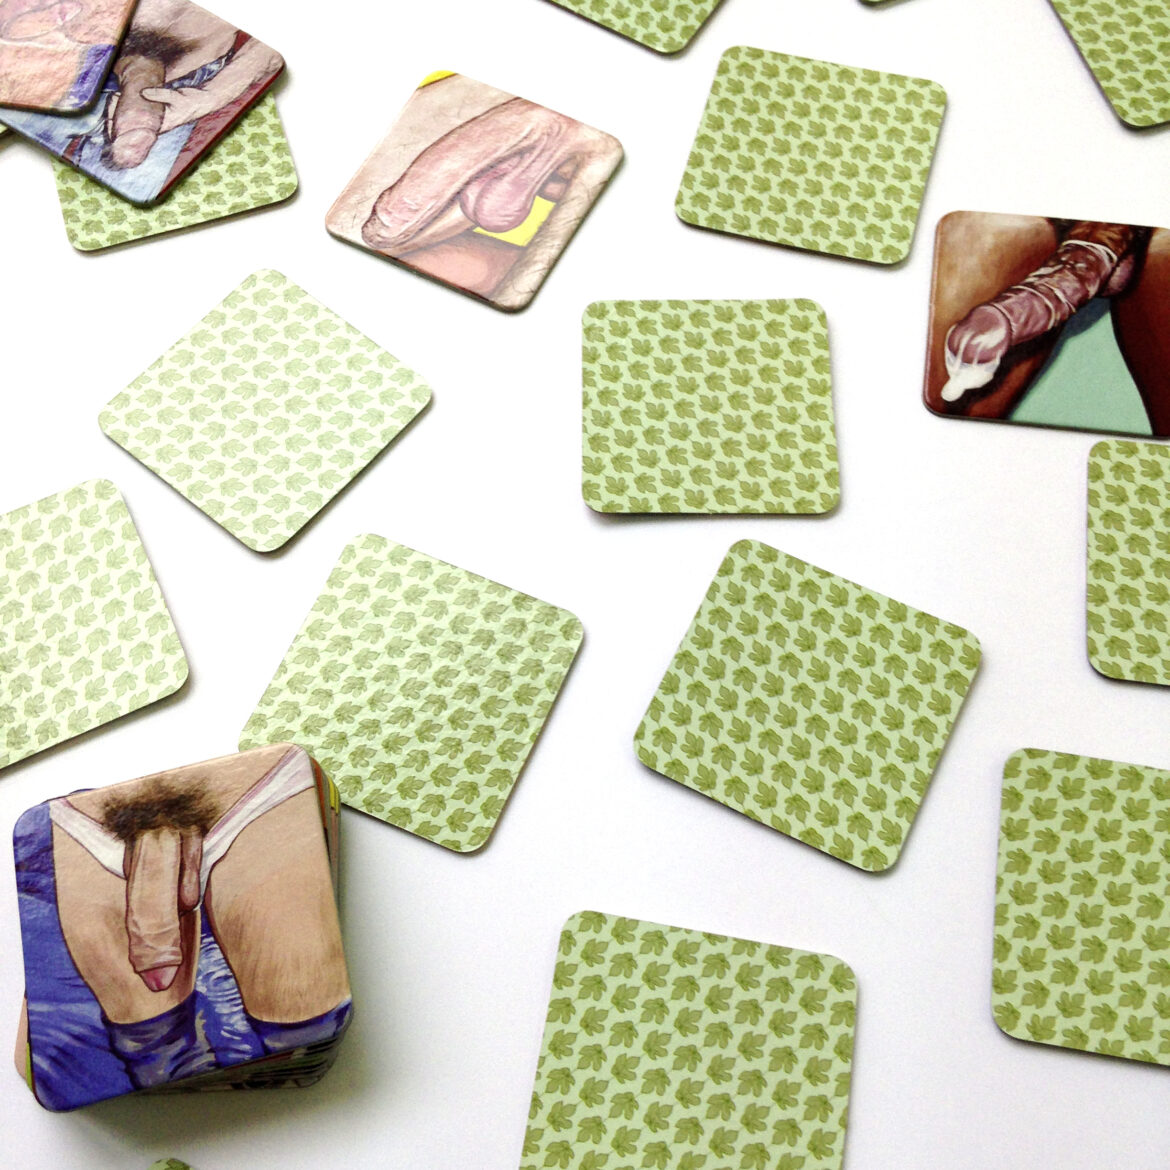 playing cards of the "Sweet Memories" memo game by Paul Astor Berlin